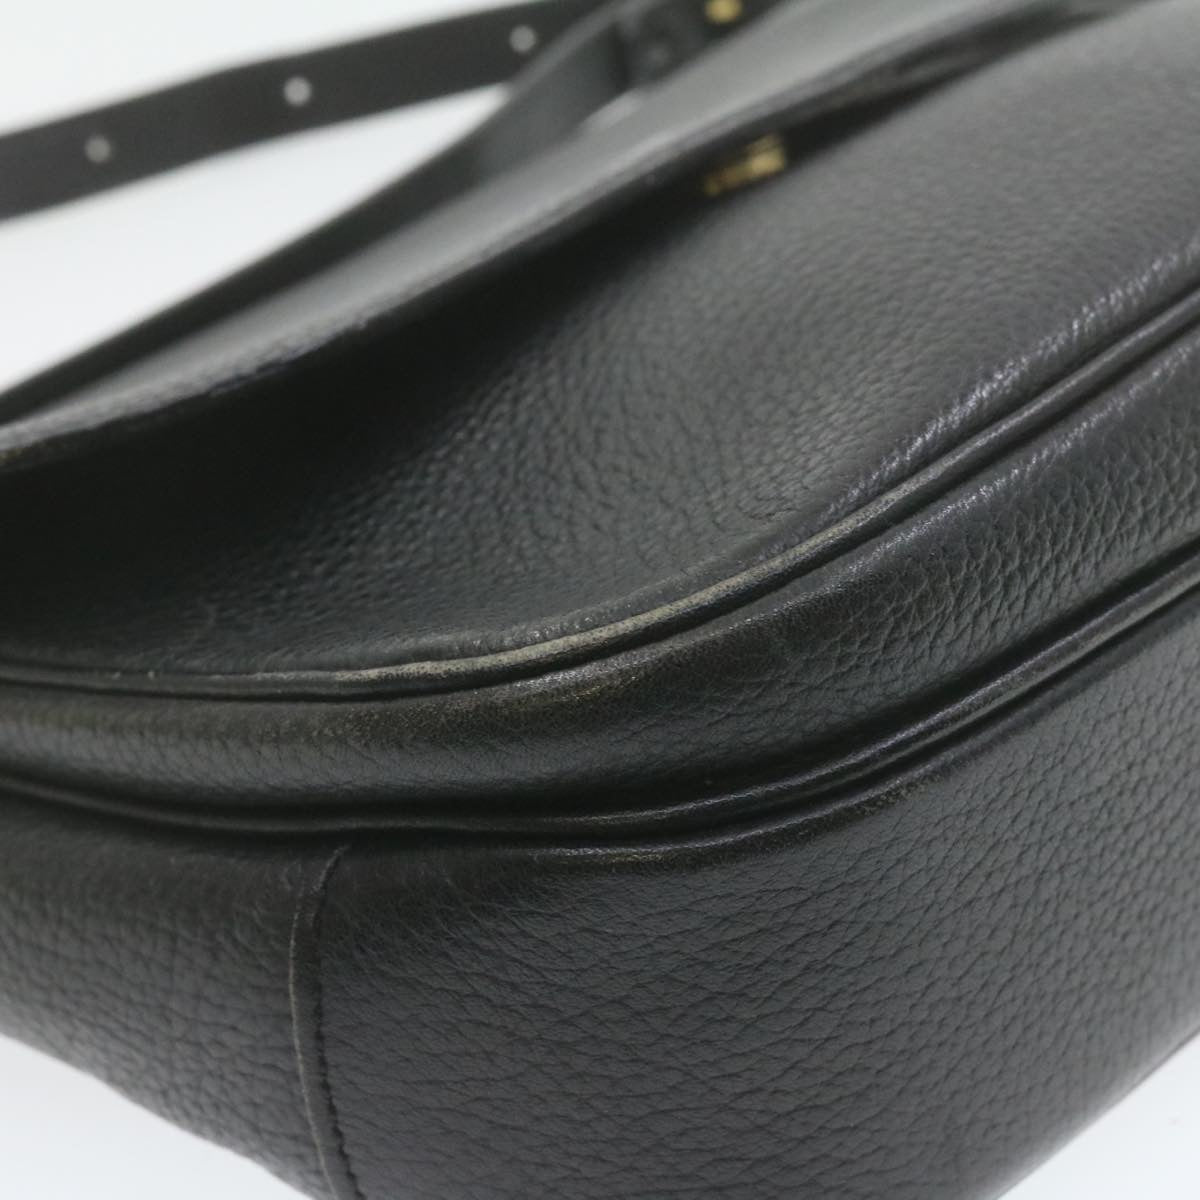 Burberrys Nova Check Shoulder Bag Leather Black Auth am636g